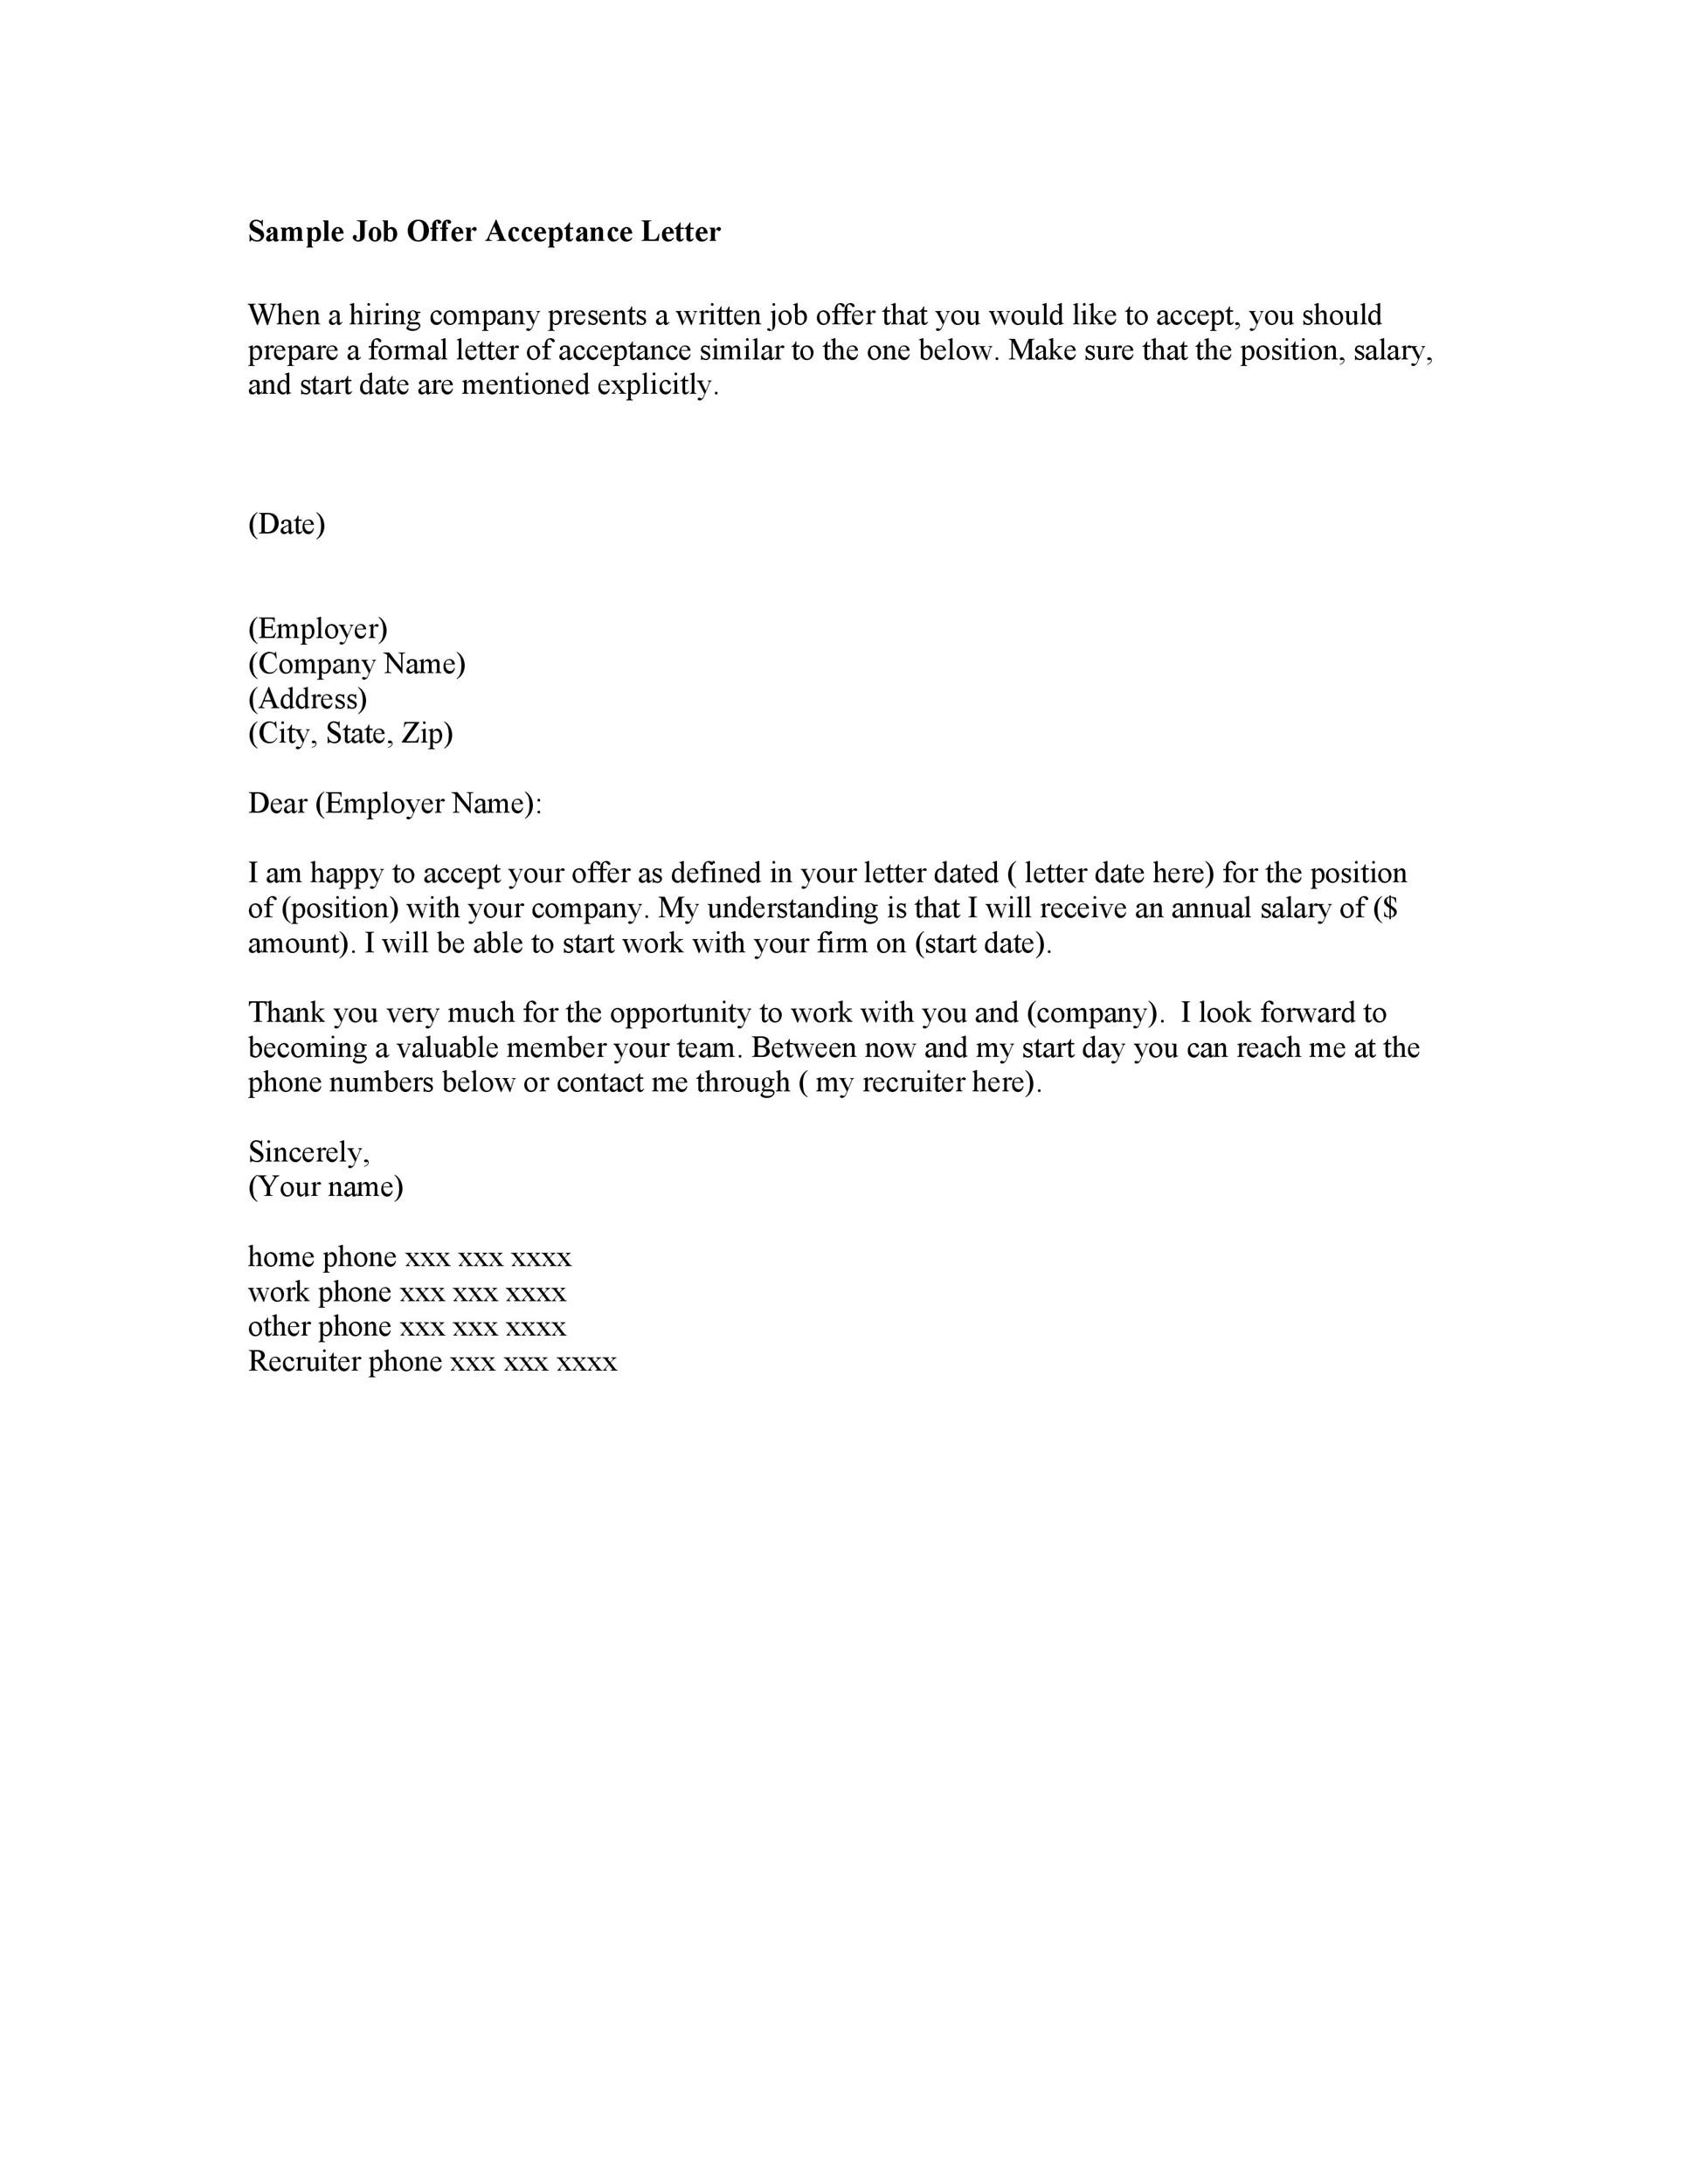 Employer Job Offer Letter from templatelab.com